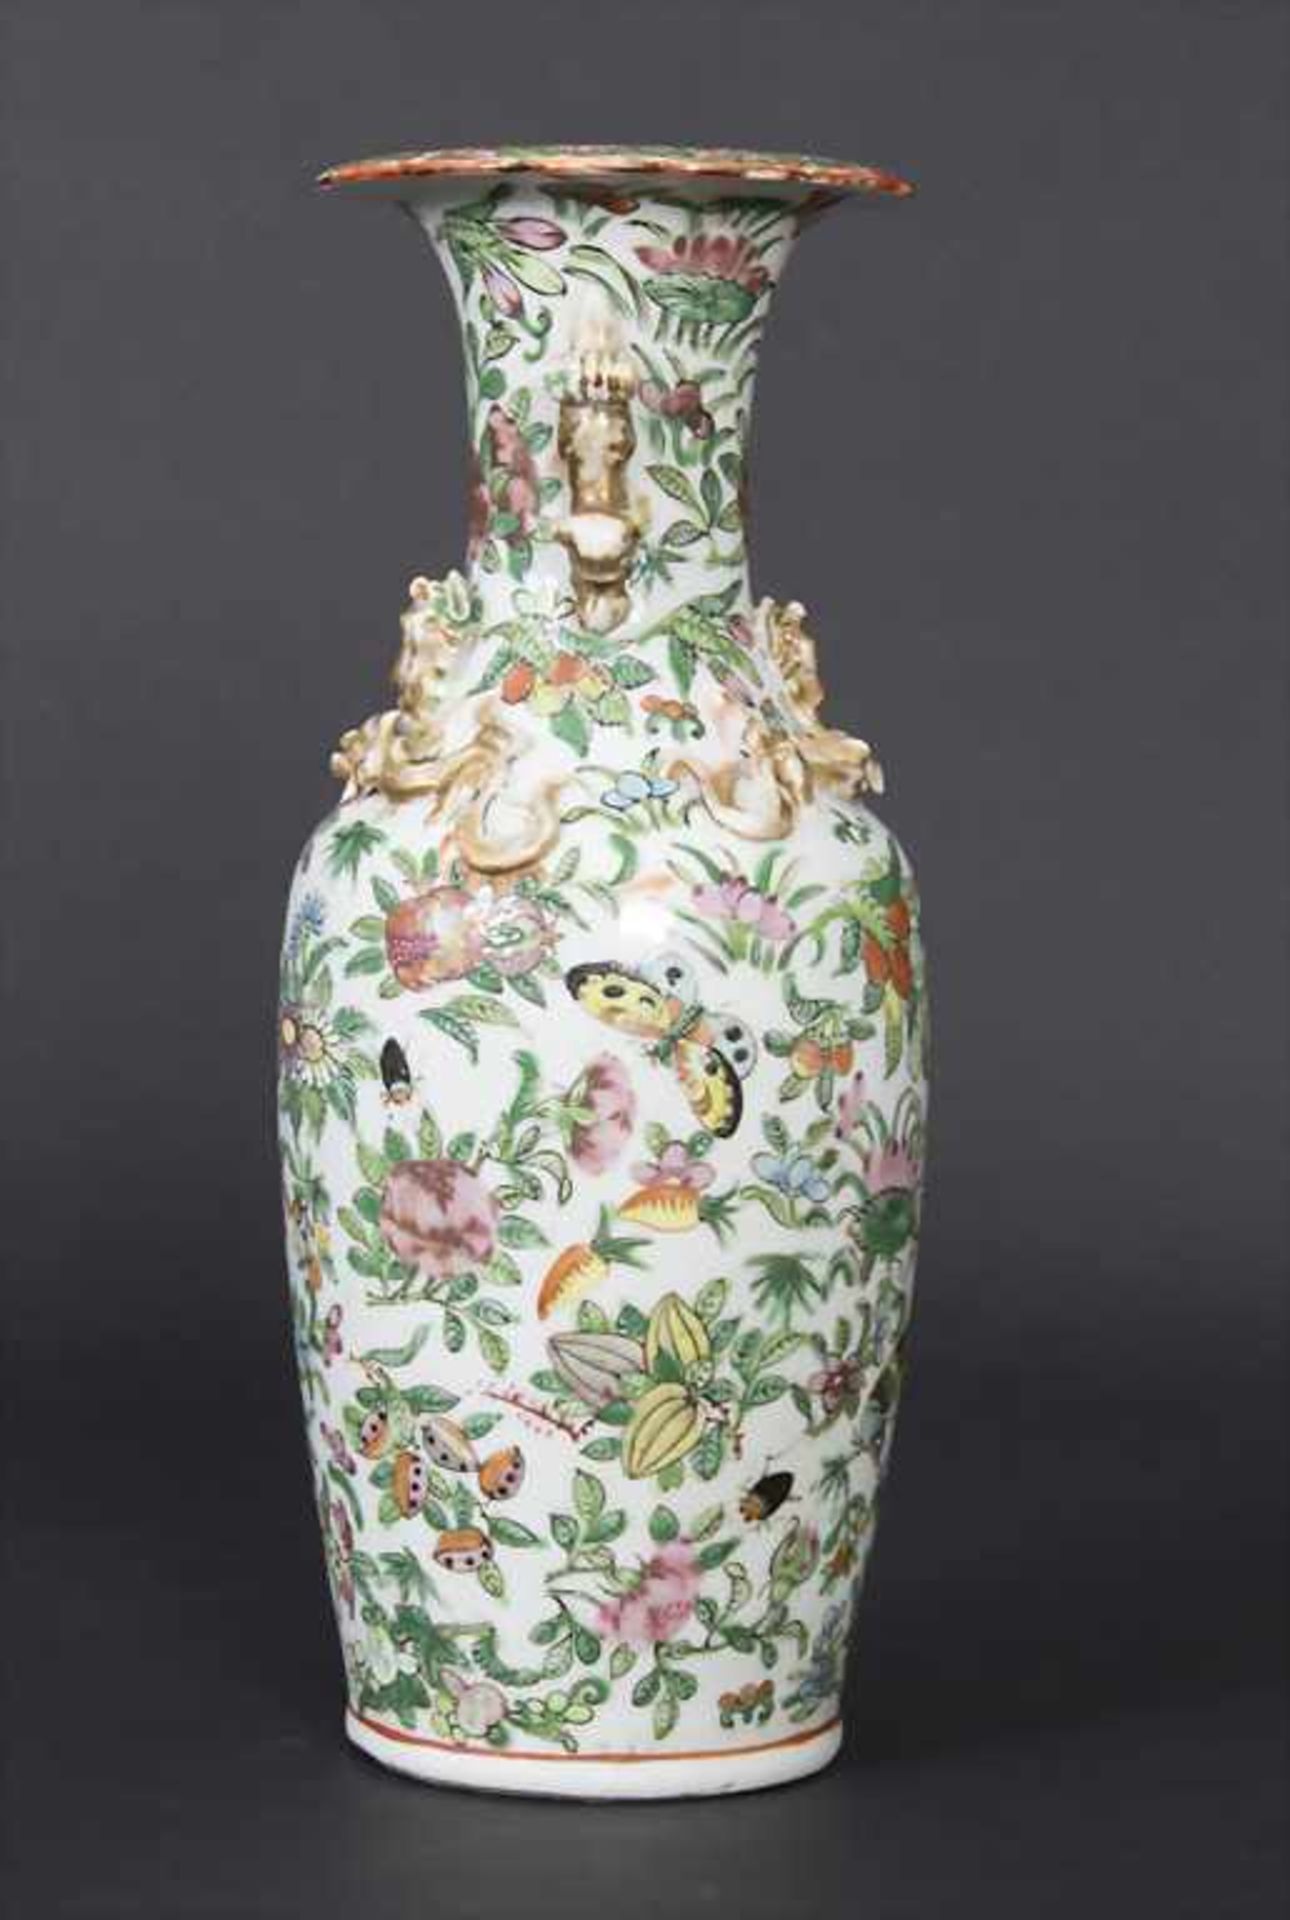 Kantonvase 'Familie Rose Dekor', China um 1900Material: Porzellan polychrome bemalt mit Blüten und - Image 4 of 7